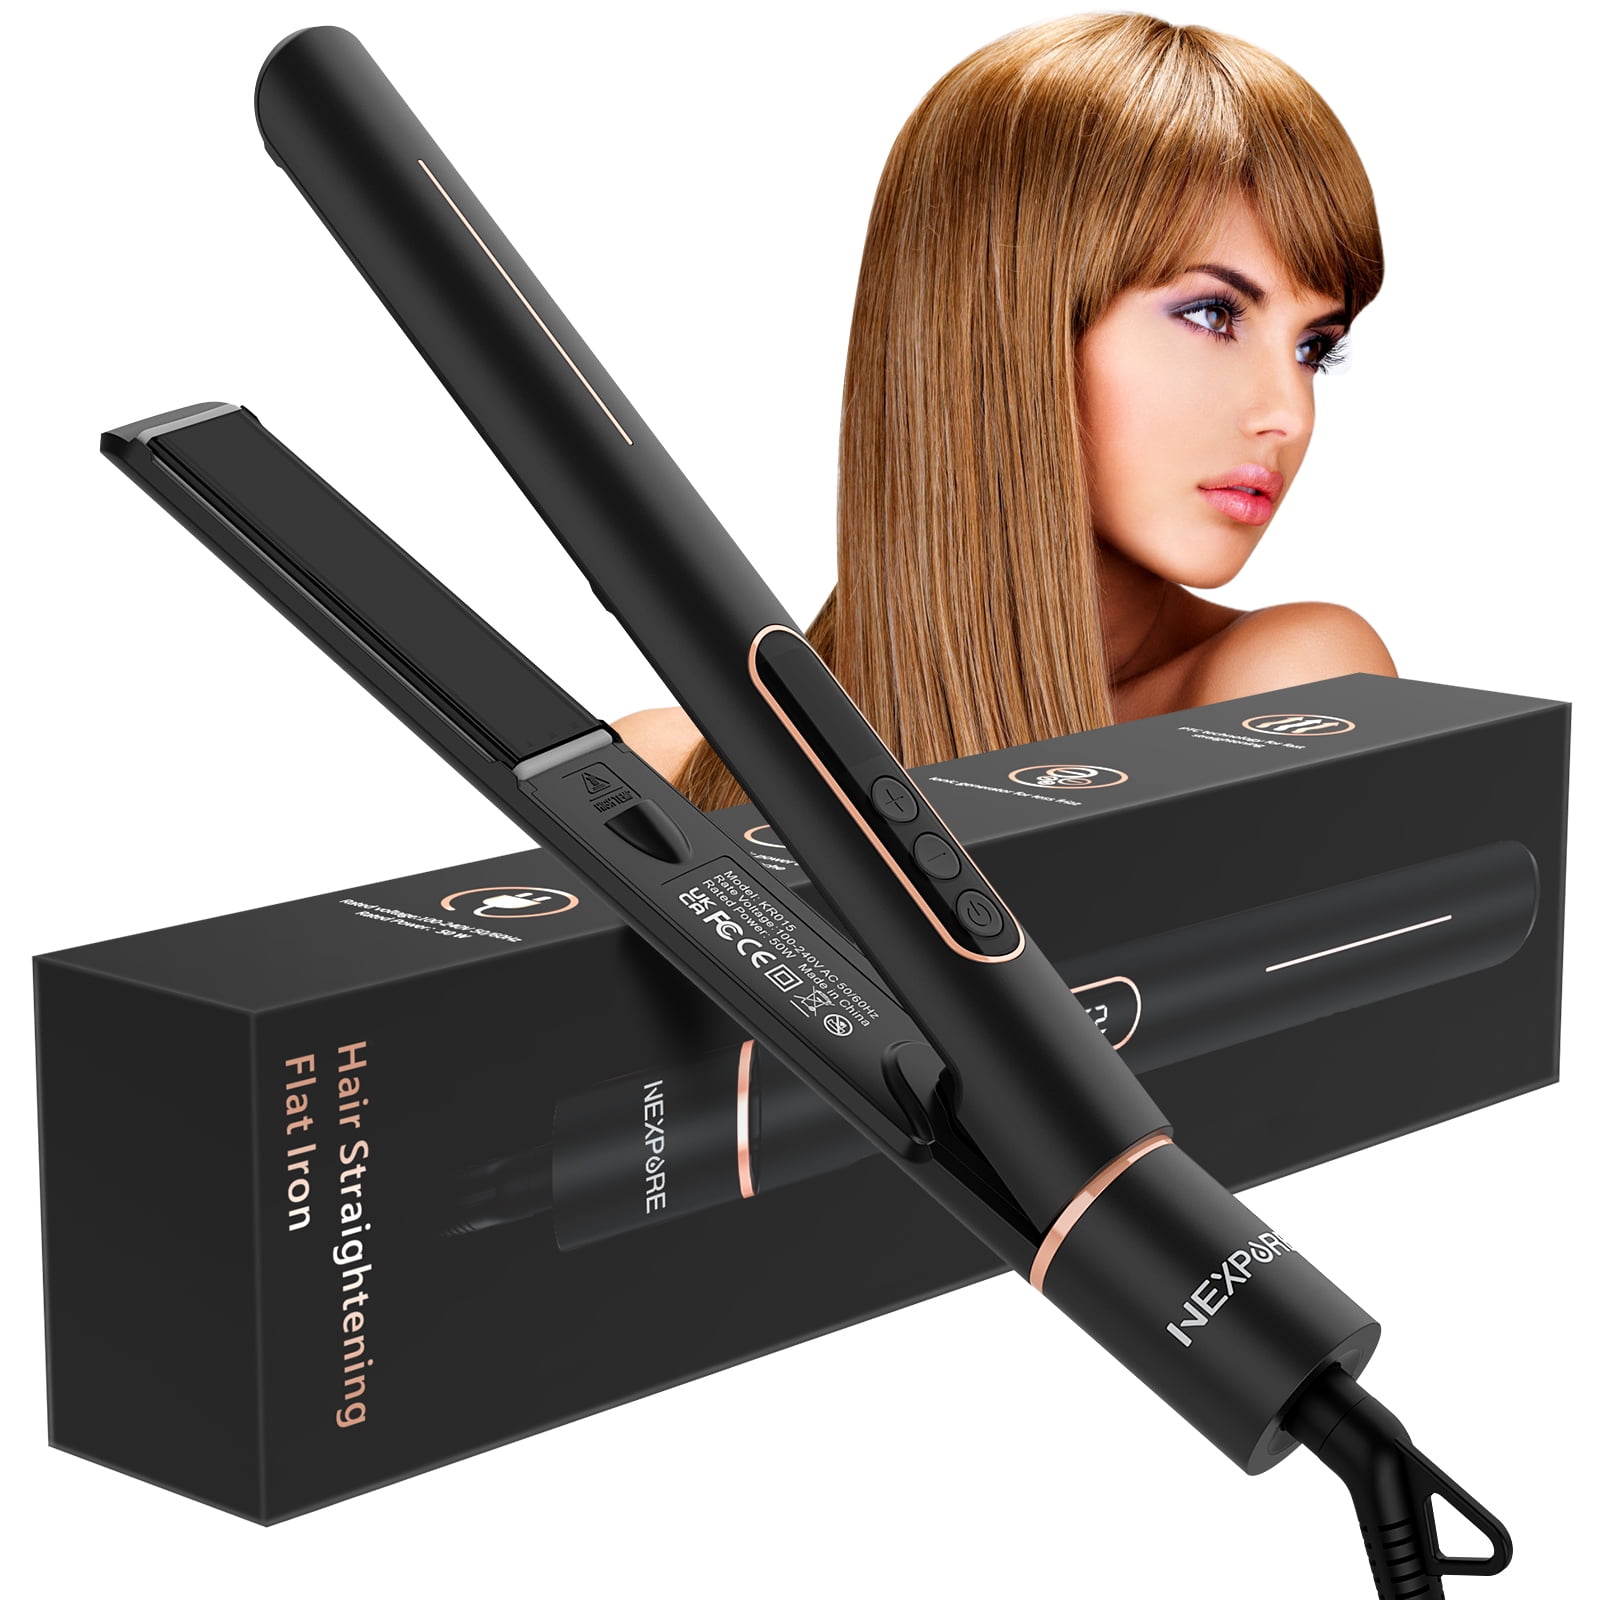 Pro Styling Hair Straightener - Hair Straightener